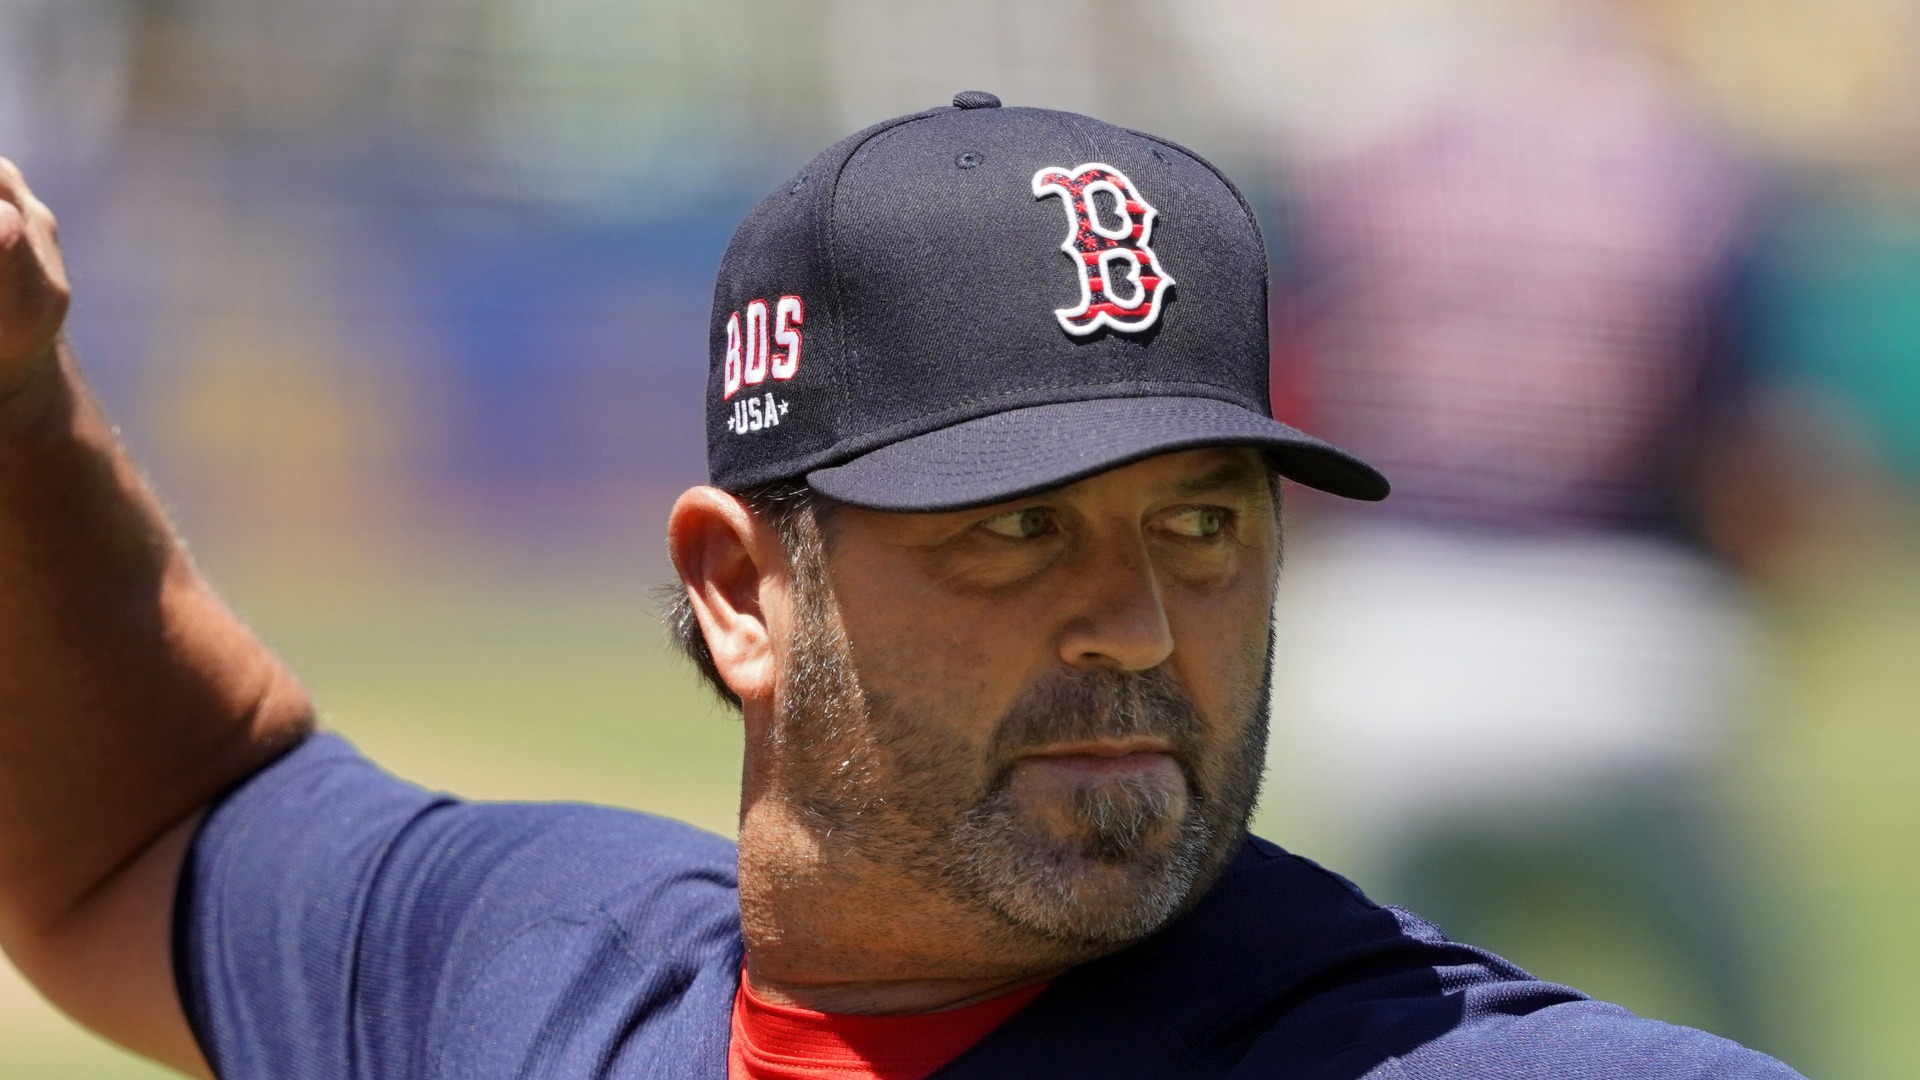 As the Posada Saga unfolds, Boston Red Sox catcher Jason Varitek